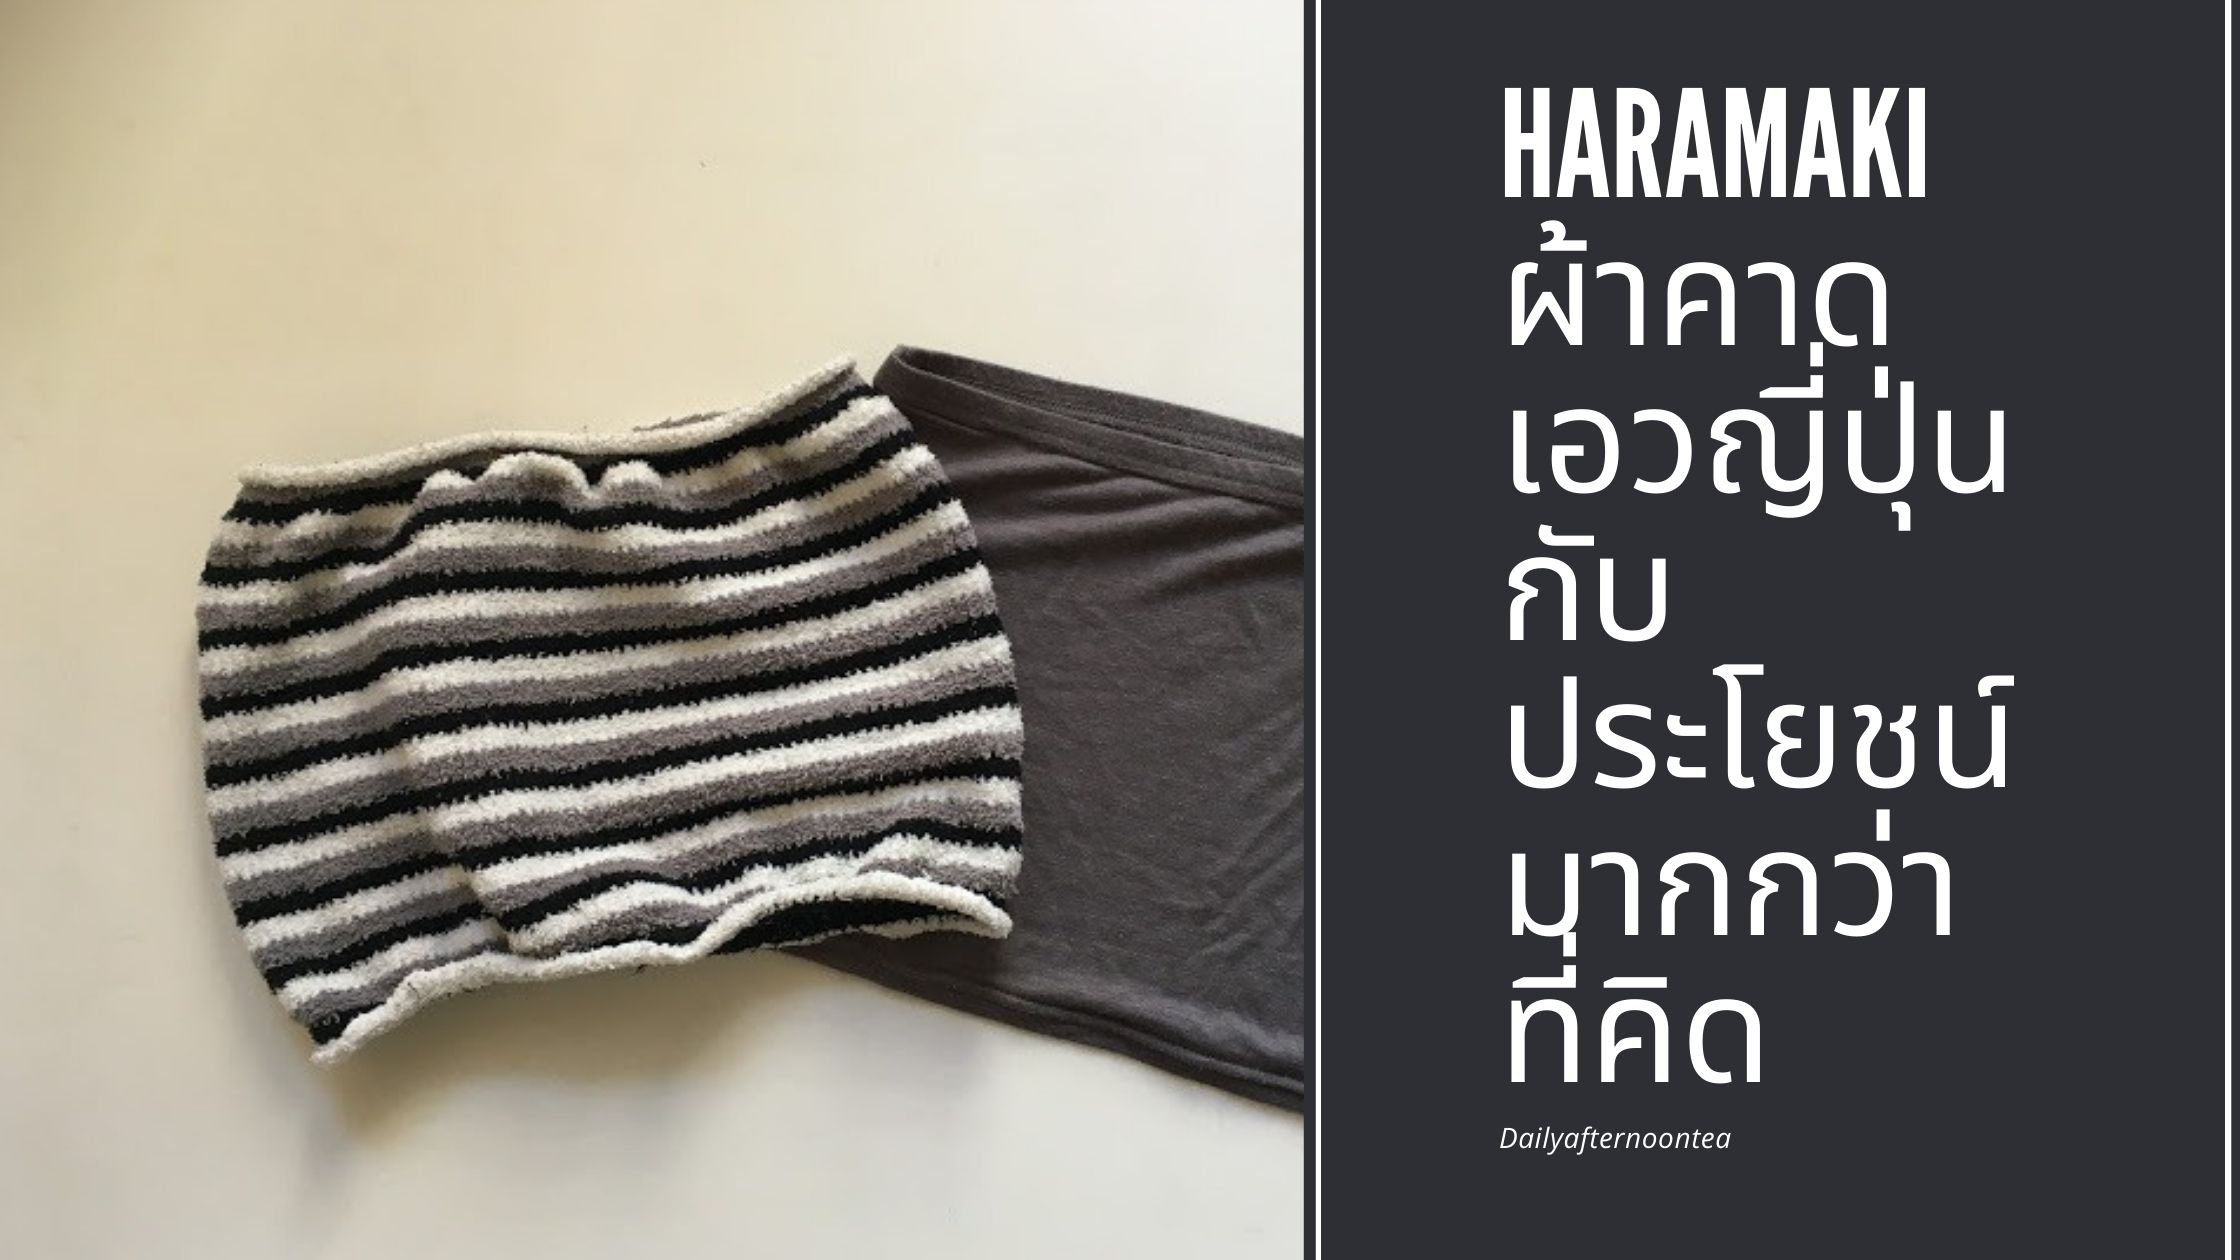 Haramaki ผ้าคาดเอวของญี่ปุ่น กับประโยชน์ที่มากกว่าที่คิด